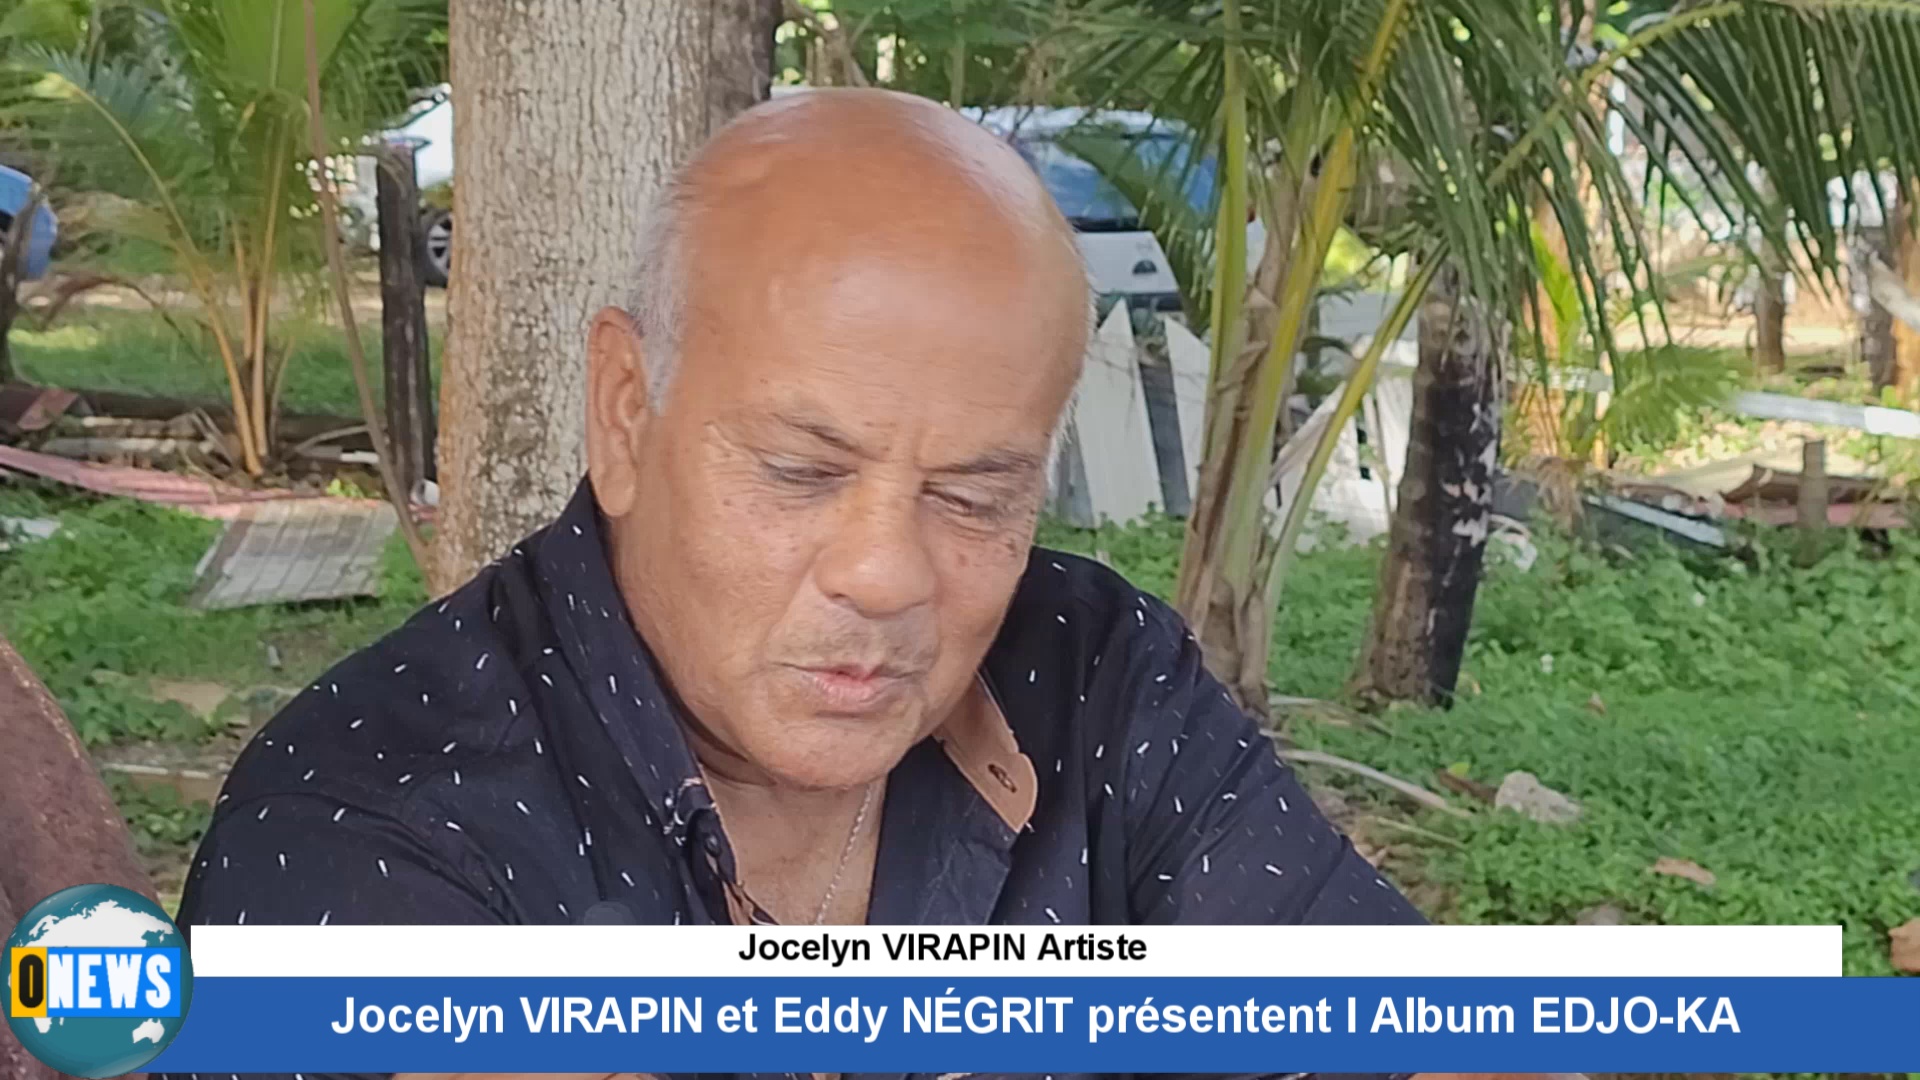 [Vidéo]Onews Musique. Jocelyn VIRAPIN et Eddy NÉGRIT présentent l Album EDJO-KA